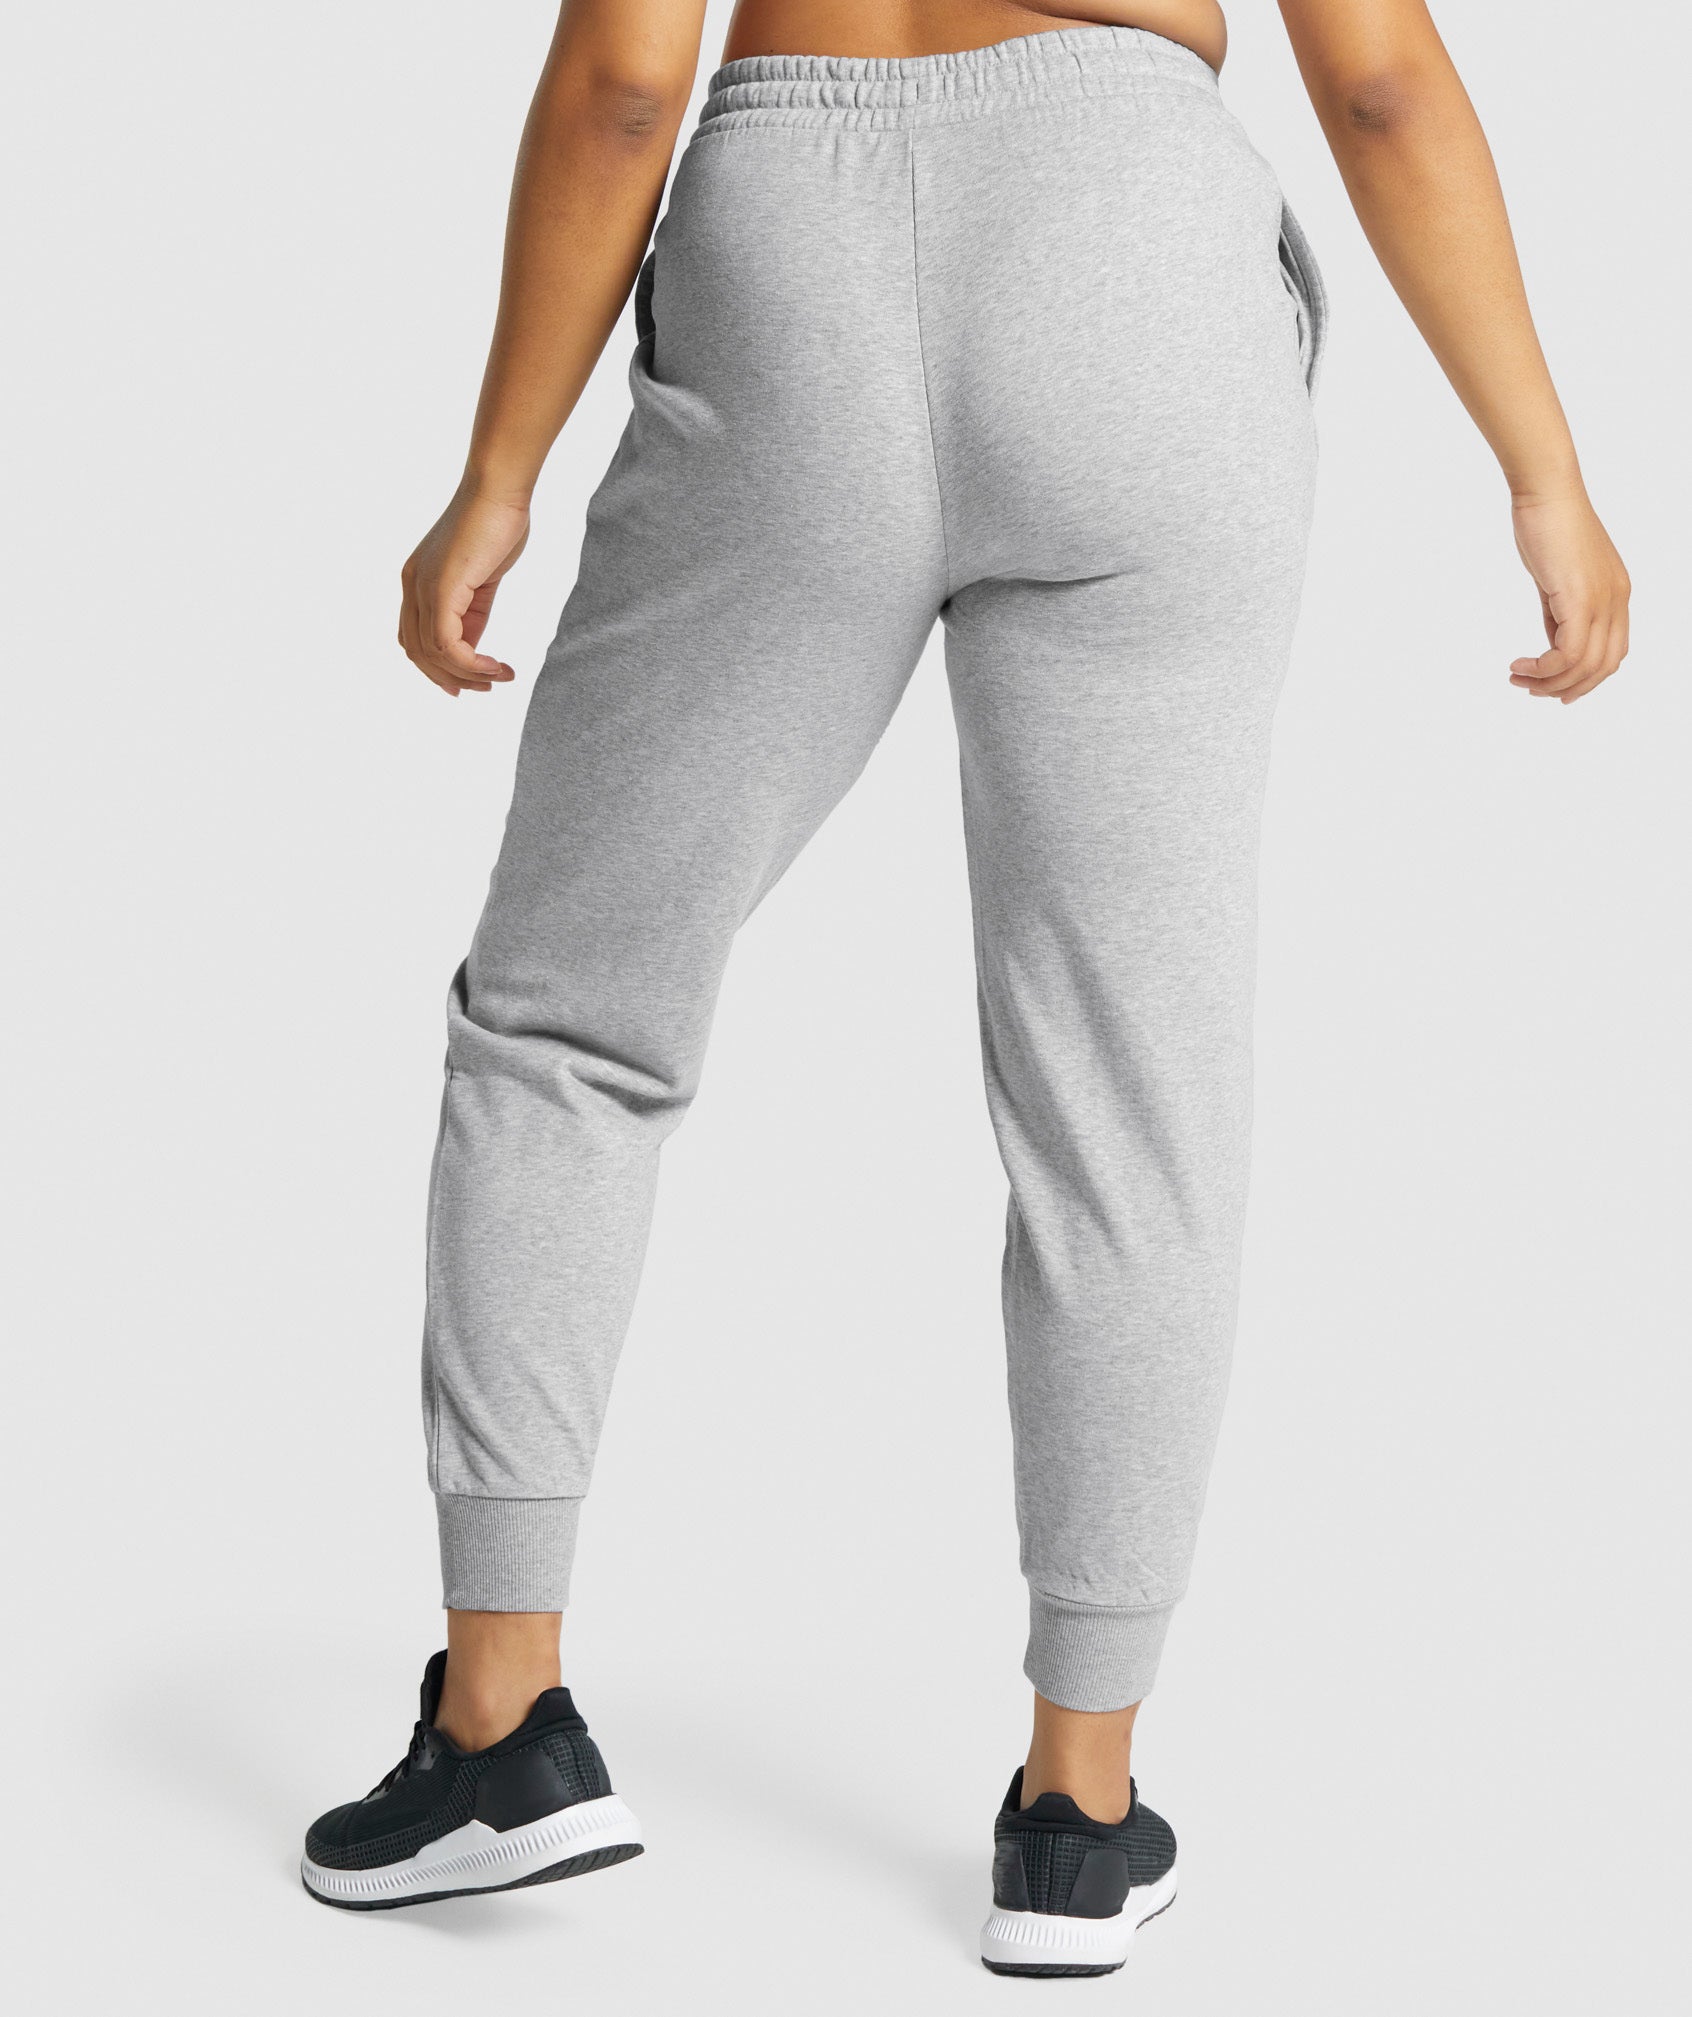 Gymshark Womens Size M Dry Aspire Leggings in Light Gray Marl Pockets NWT